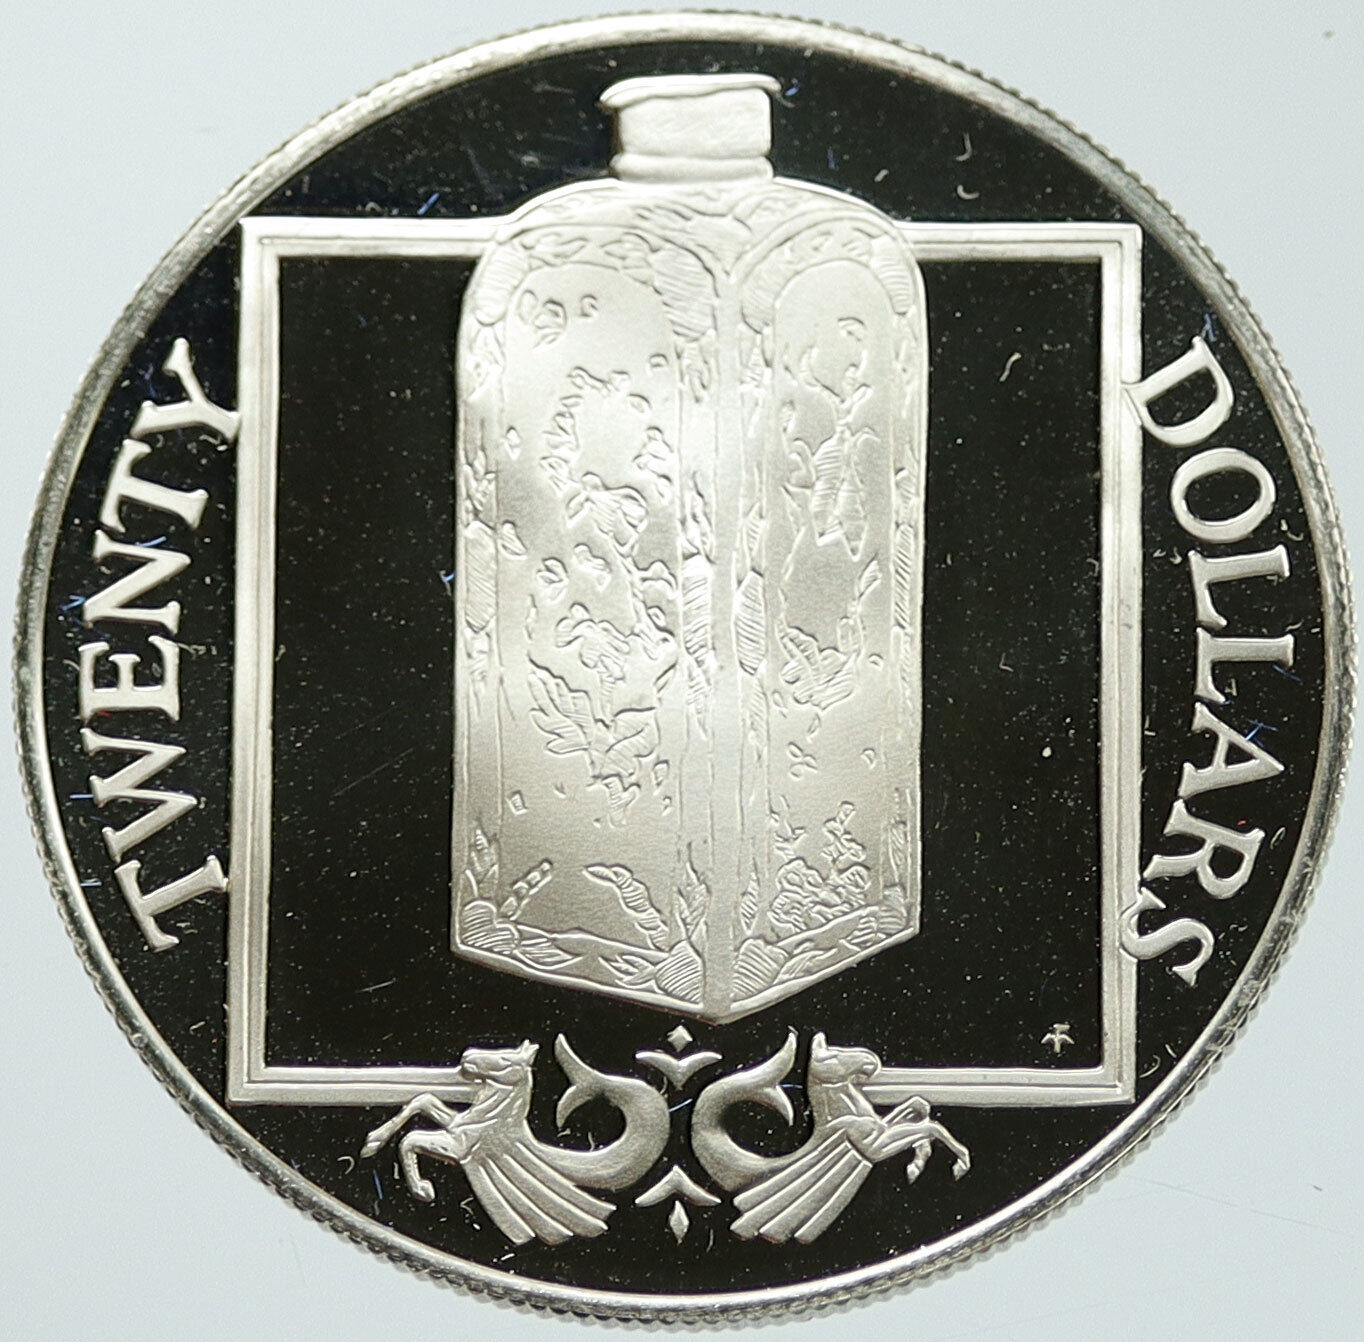 1985 British Virgin Islands Ship Treasure BOTTLE Proof Silver $20 Coin i116845